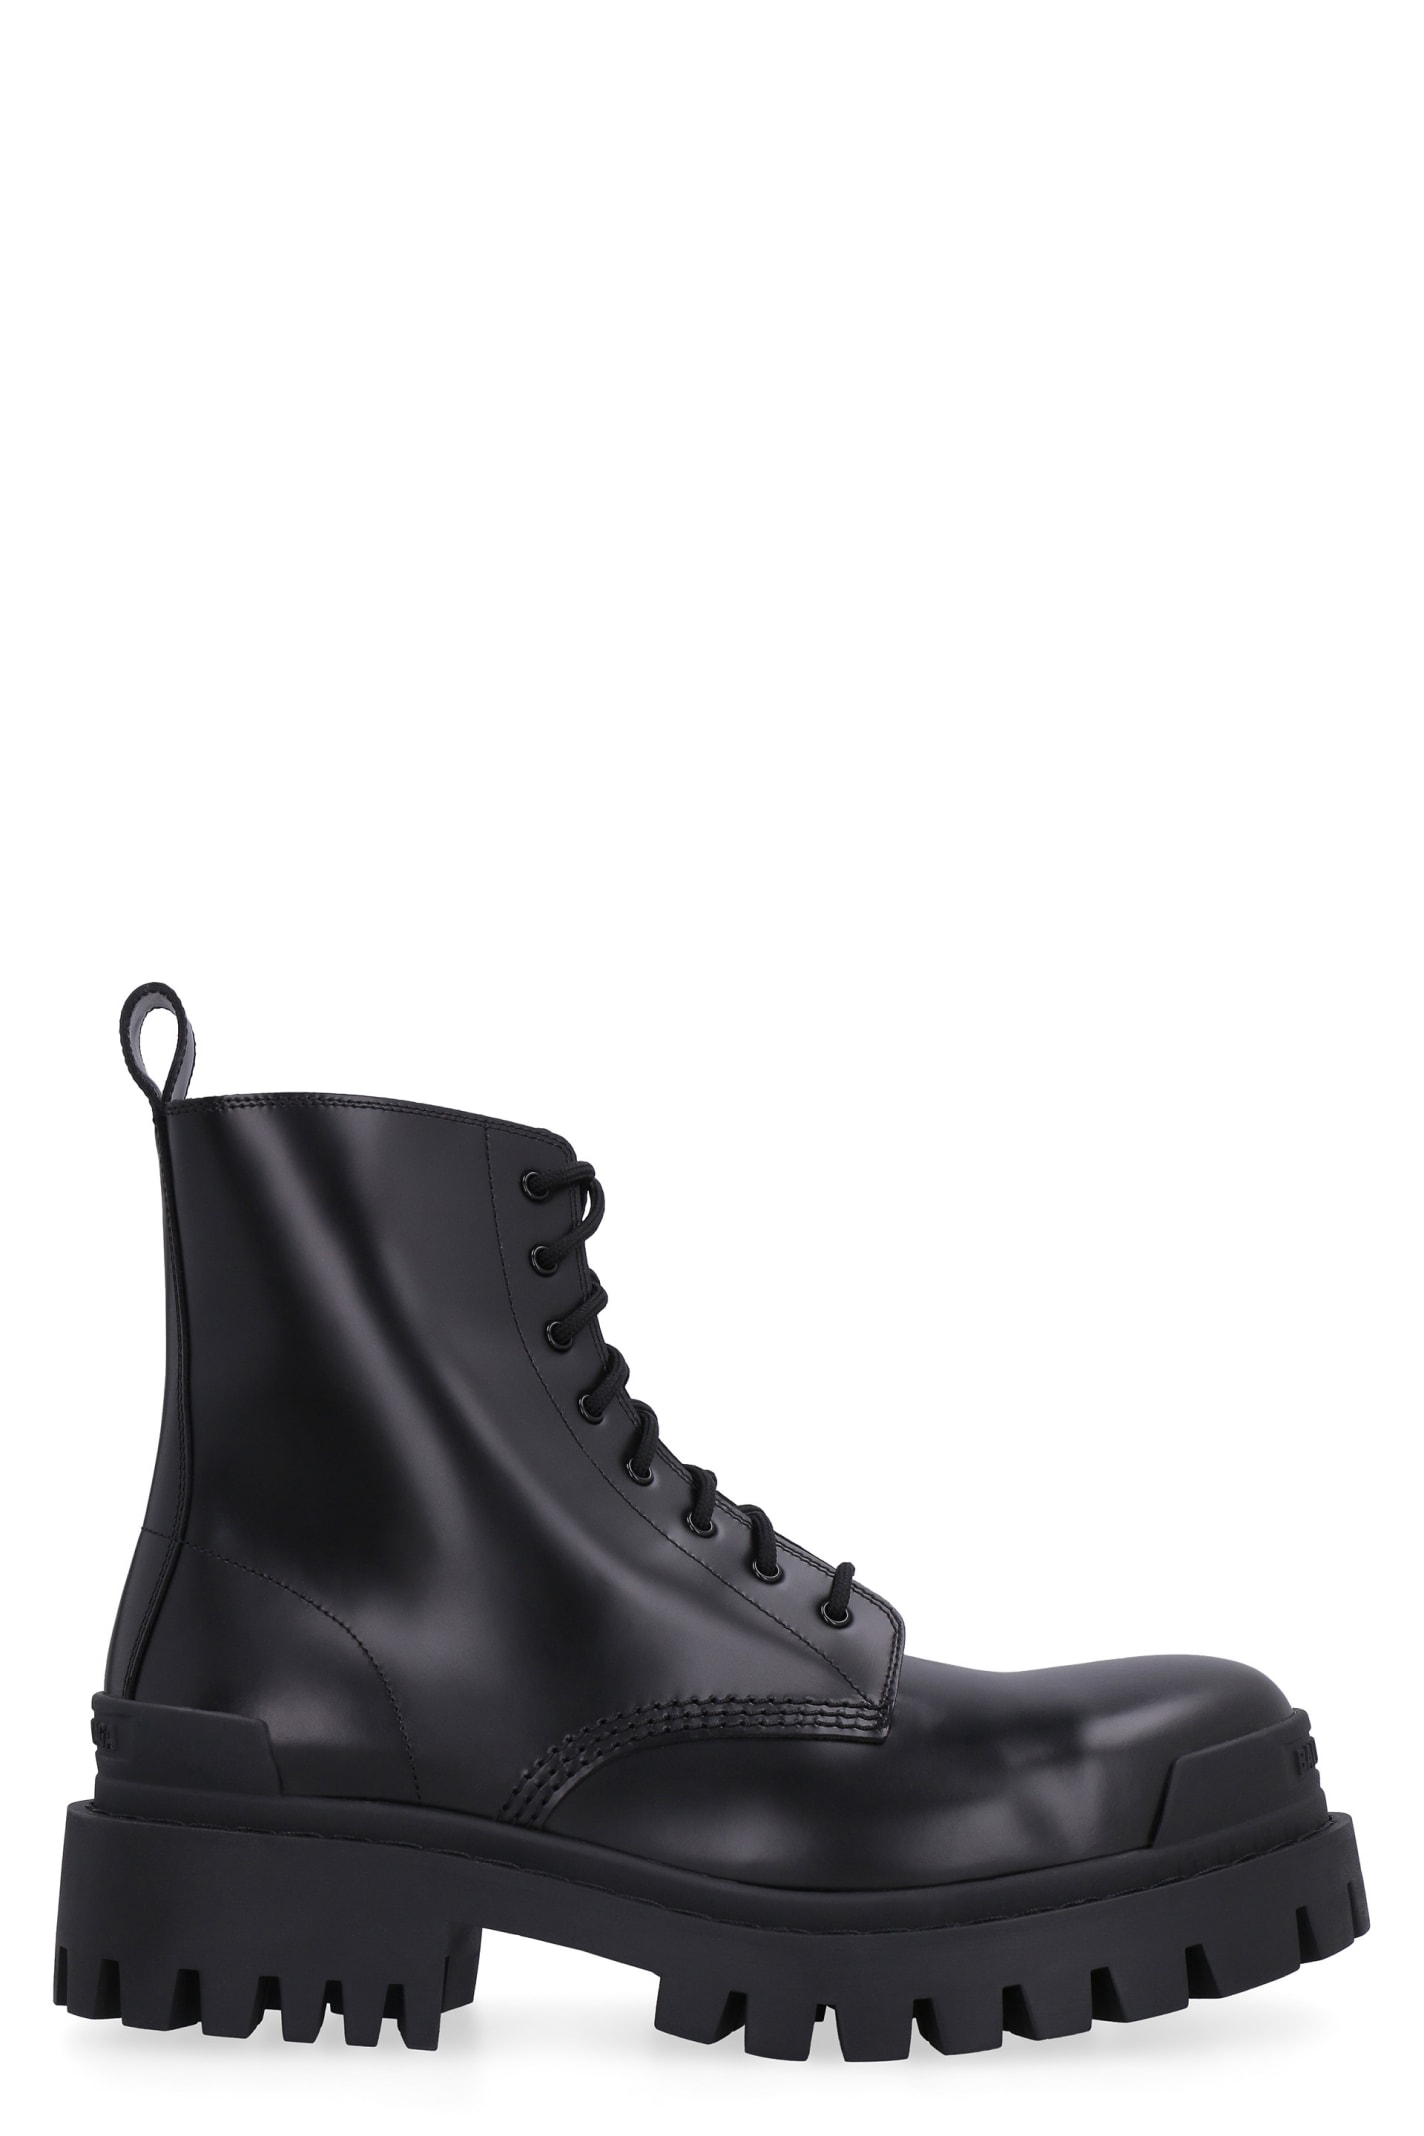 Balenciaga Strike Leather Combat Boots